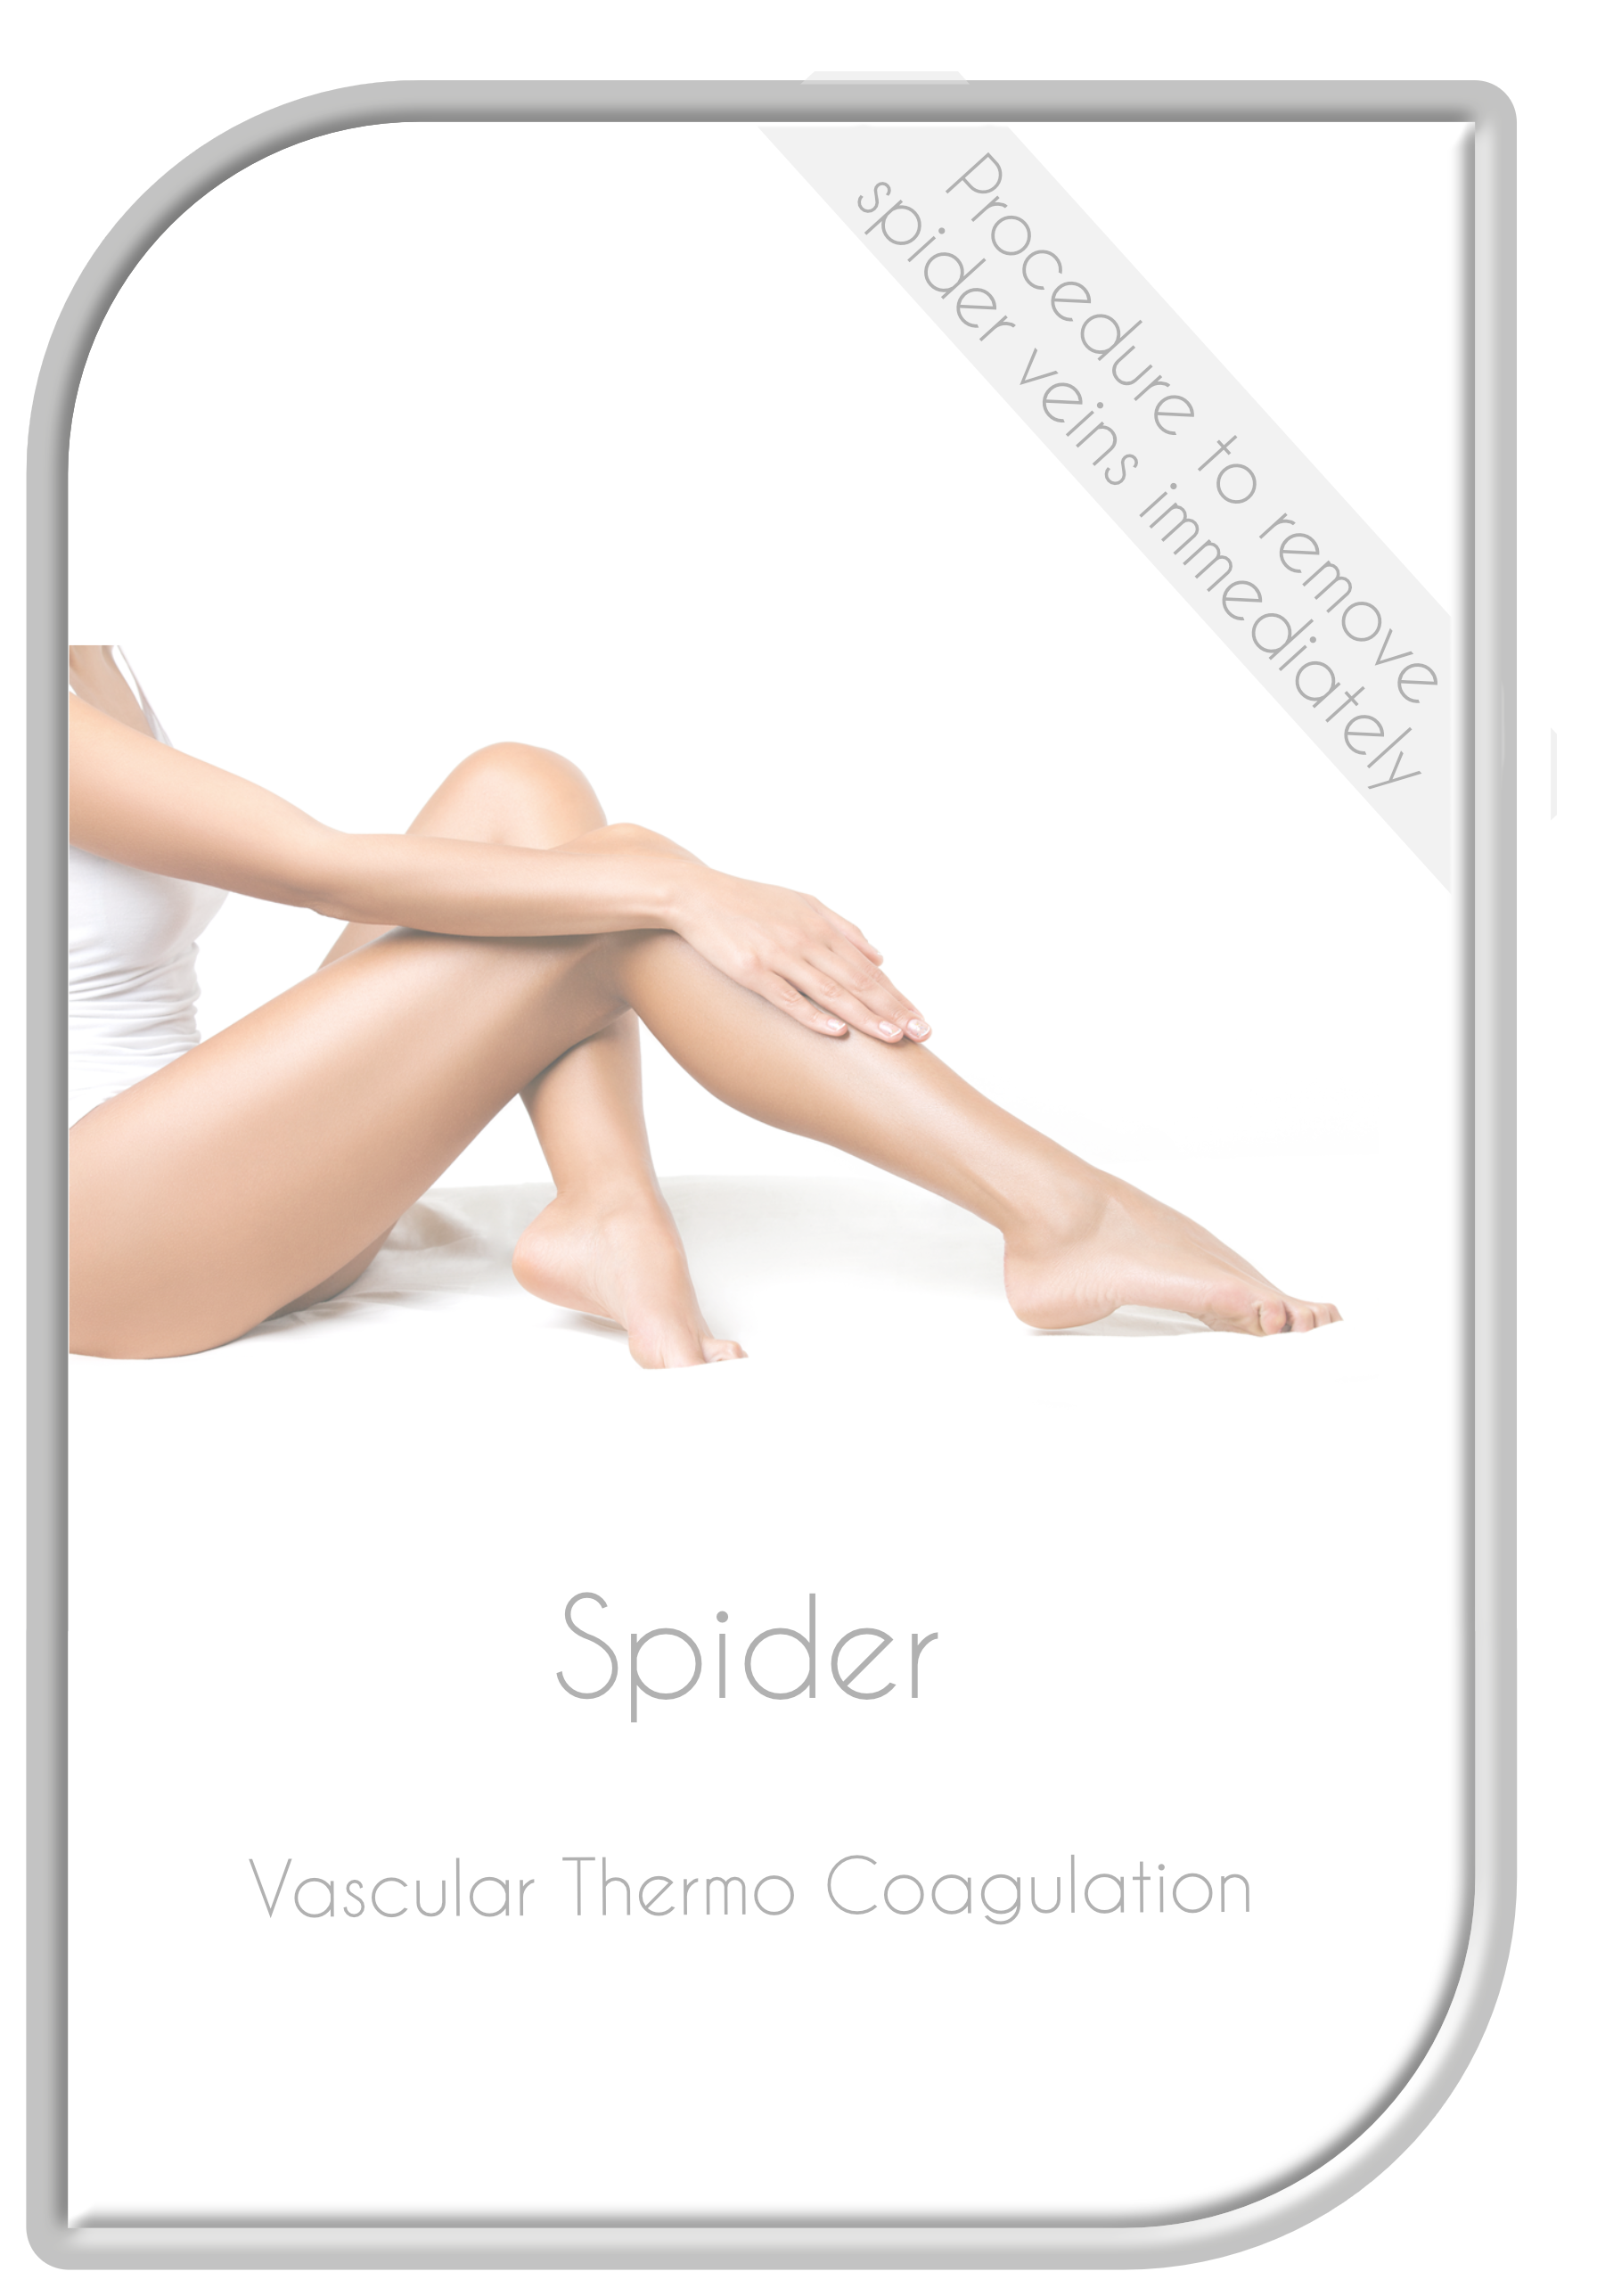 Vascular Thermo Coagulation - Spider™ - Aesthetica Skin Centre